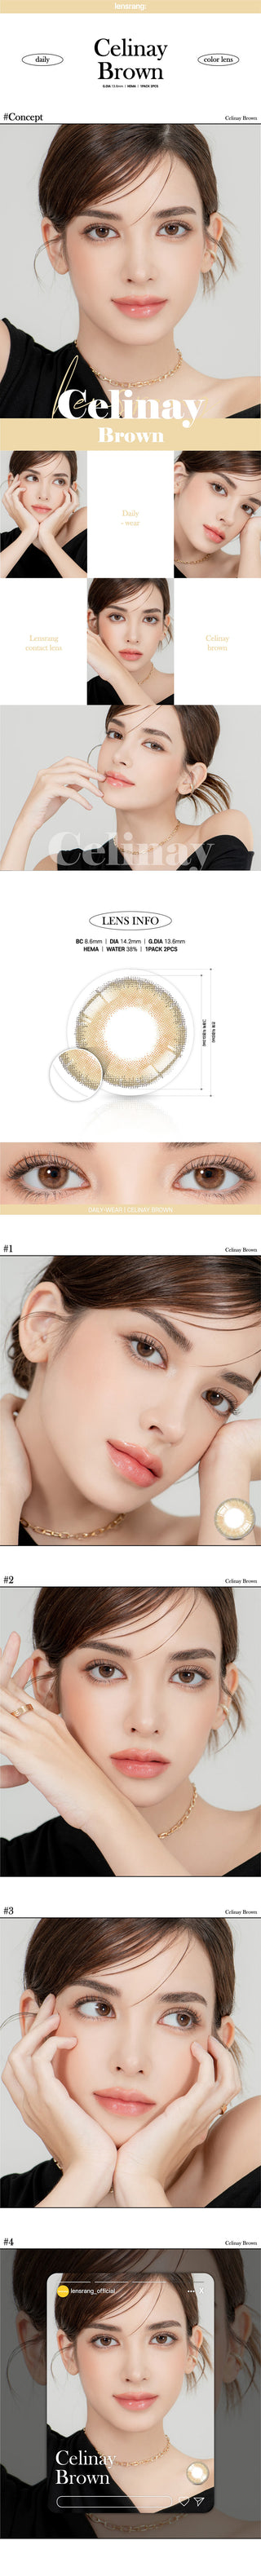 Lensrang Celinay Brown Color Contact Lens - EyeCandys